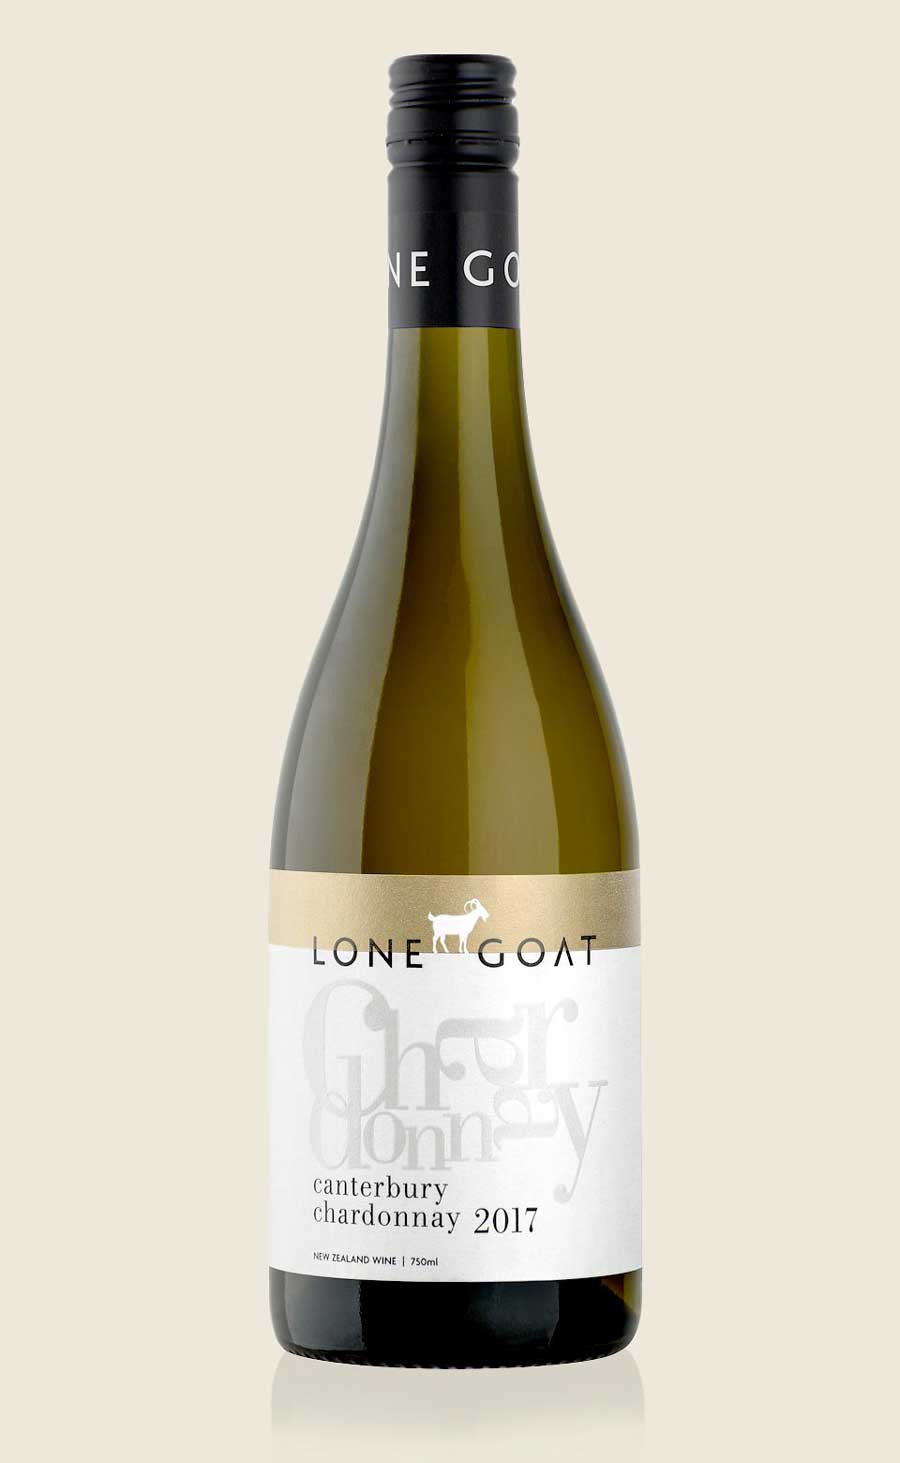 Lone Goat Rebrand and label design